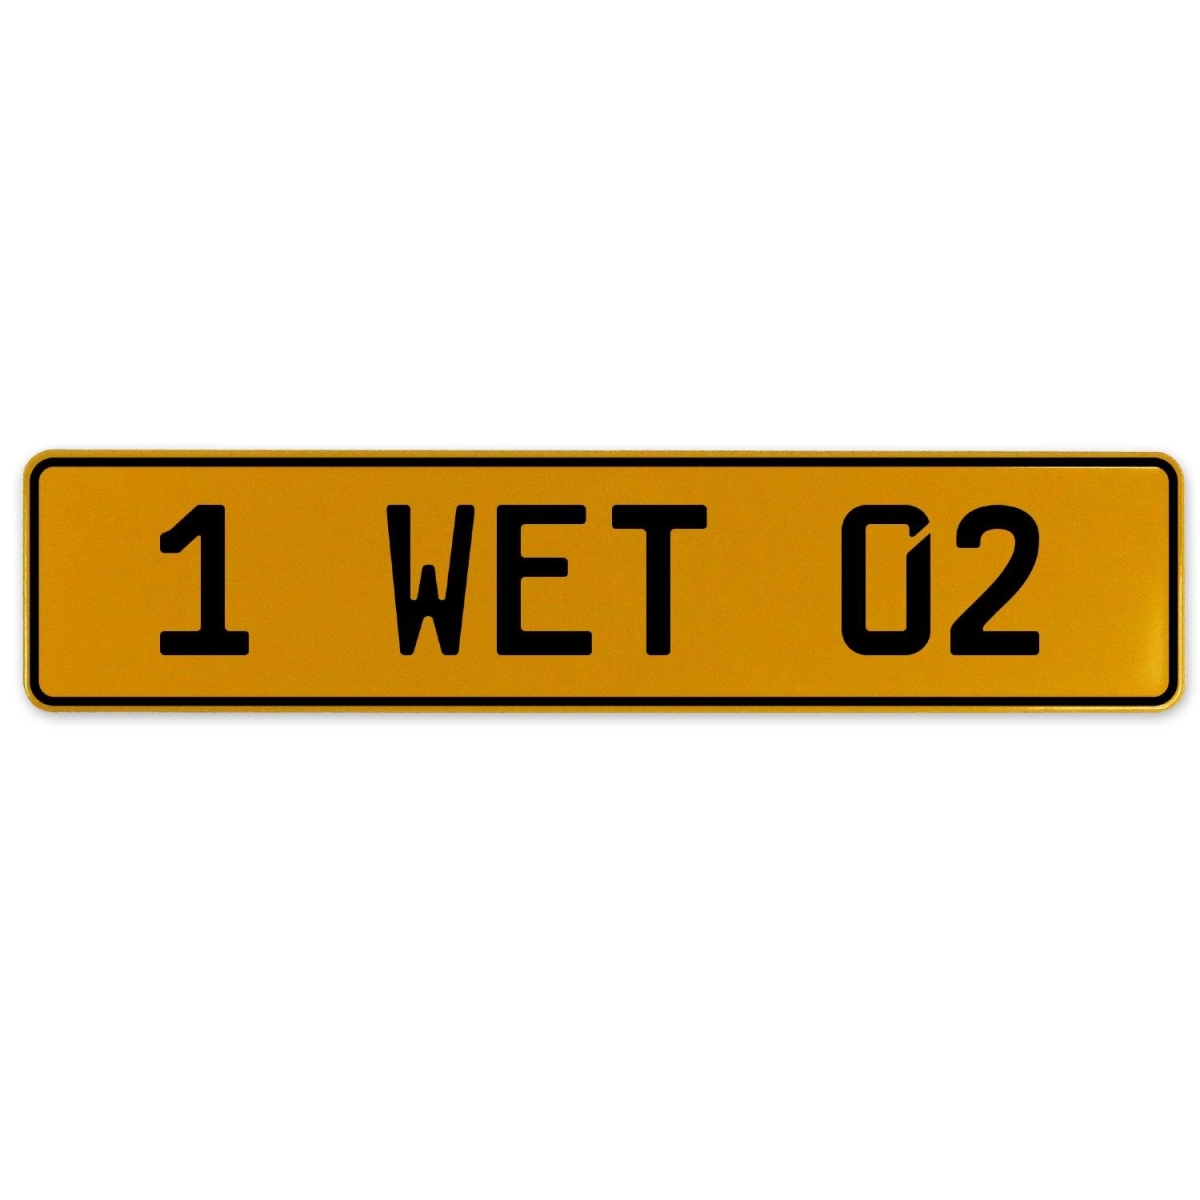 1 Wet 02 - Yellow Aluminum Street Sign Mancave Euro Plate Name Door Sign Wall